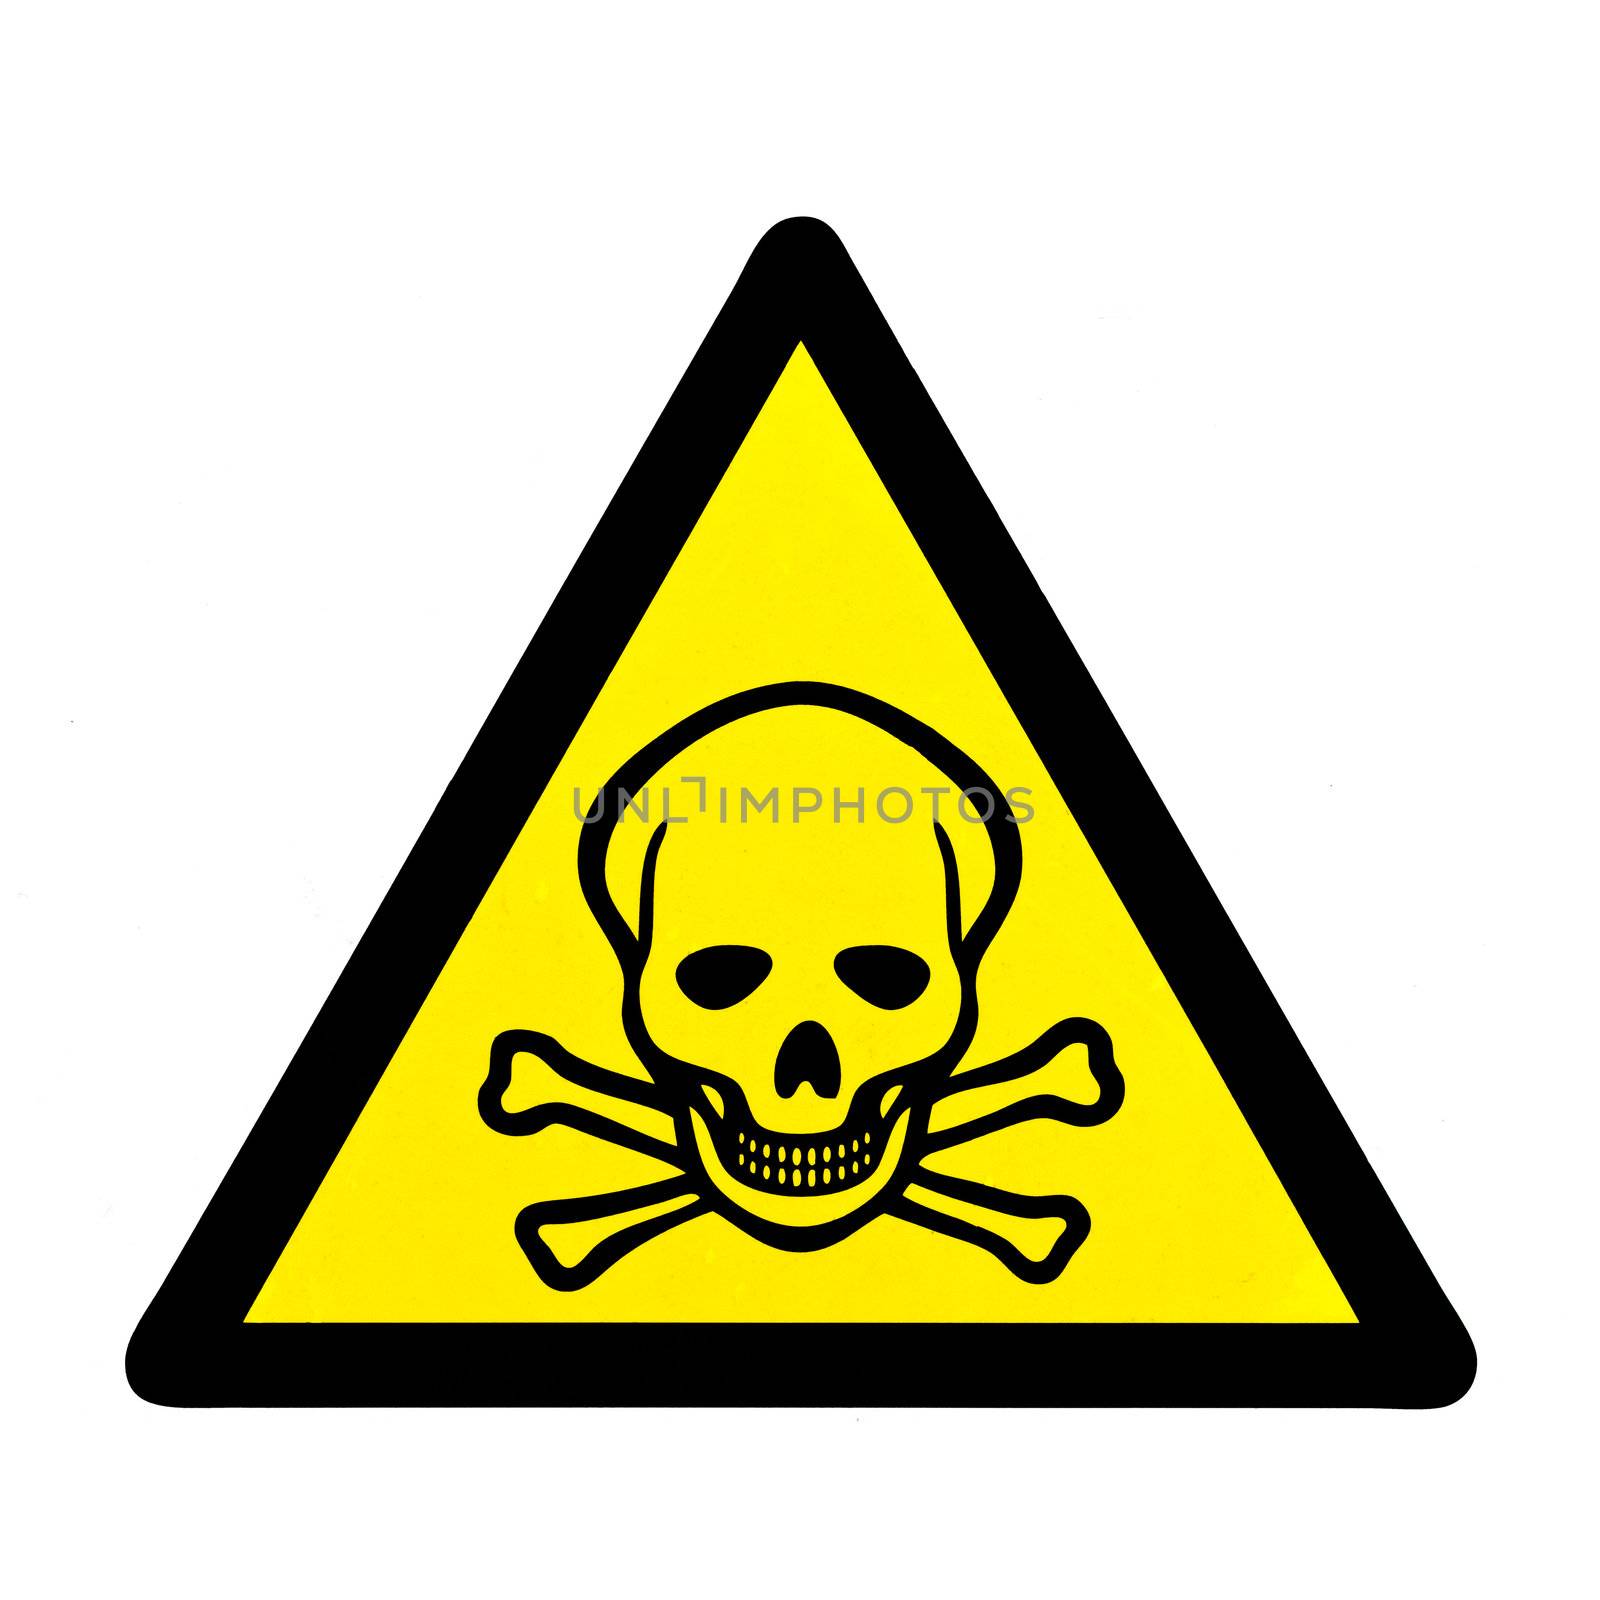 Danger to life skull and crossbones warning sign by PiLens